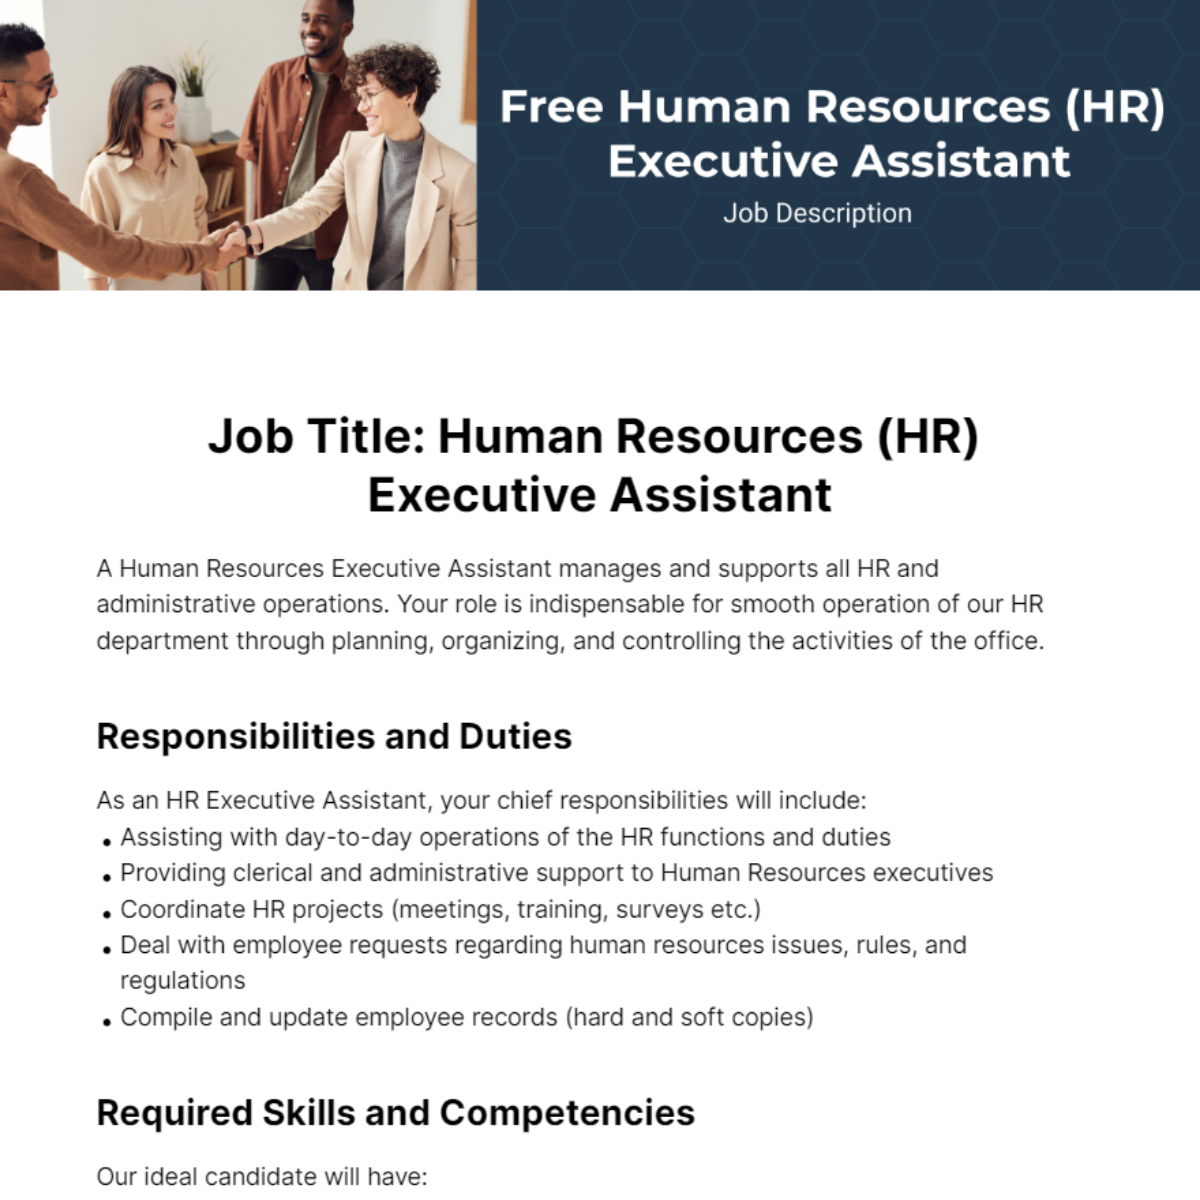 Human Resources (HR) Executive Assistant Job Description Template